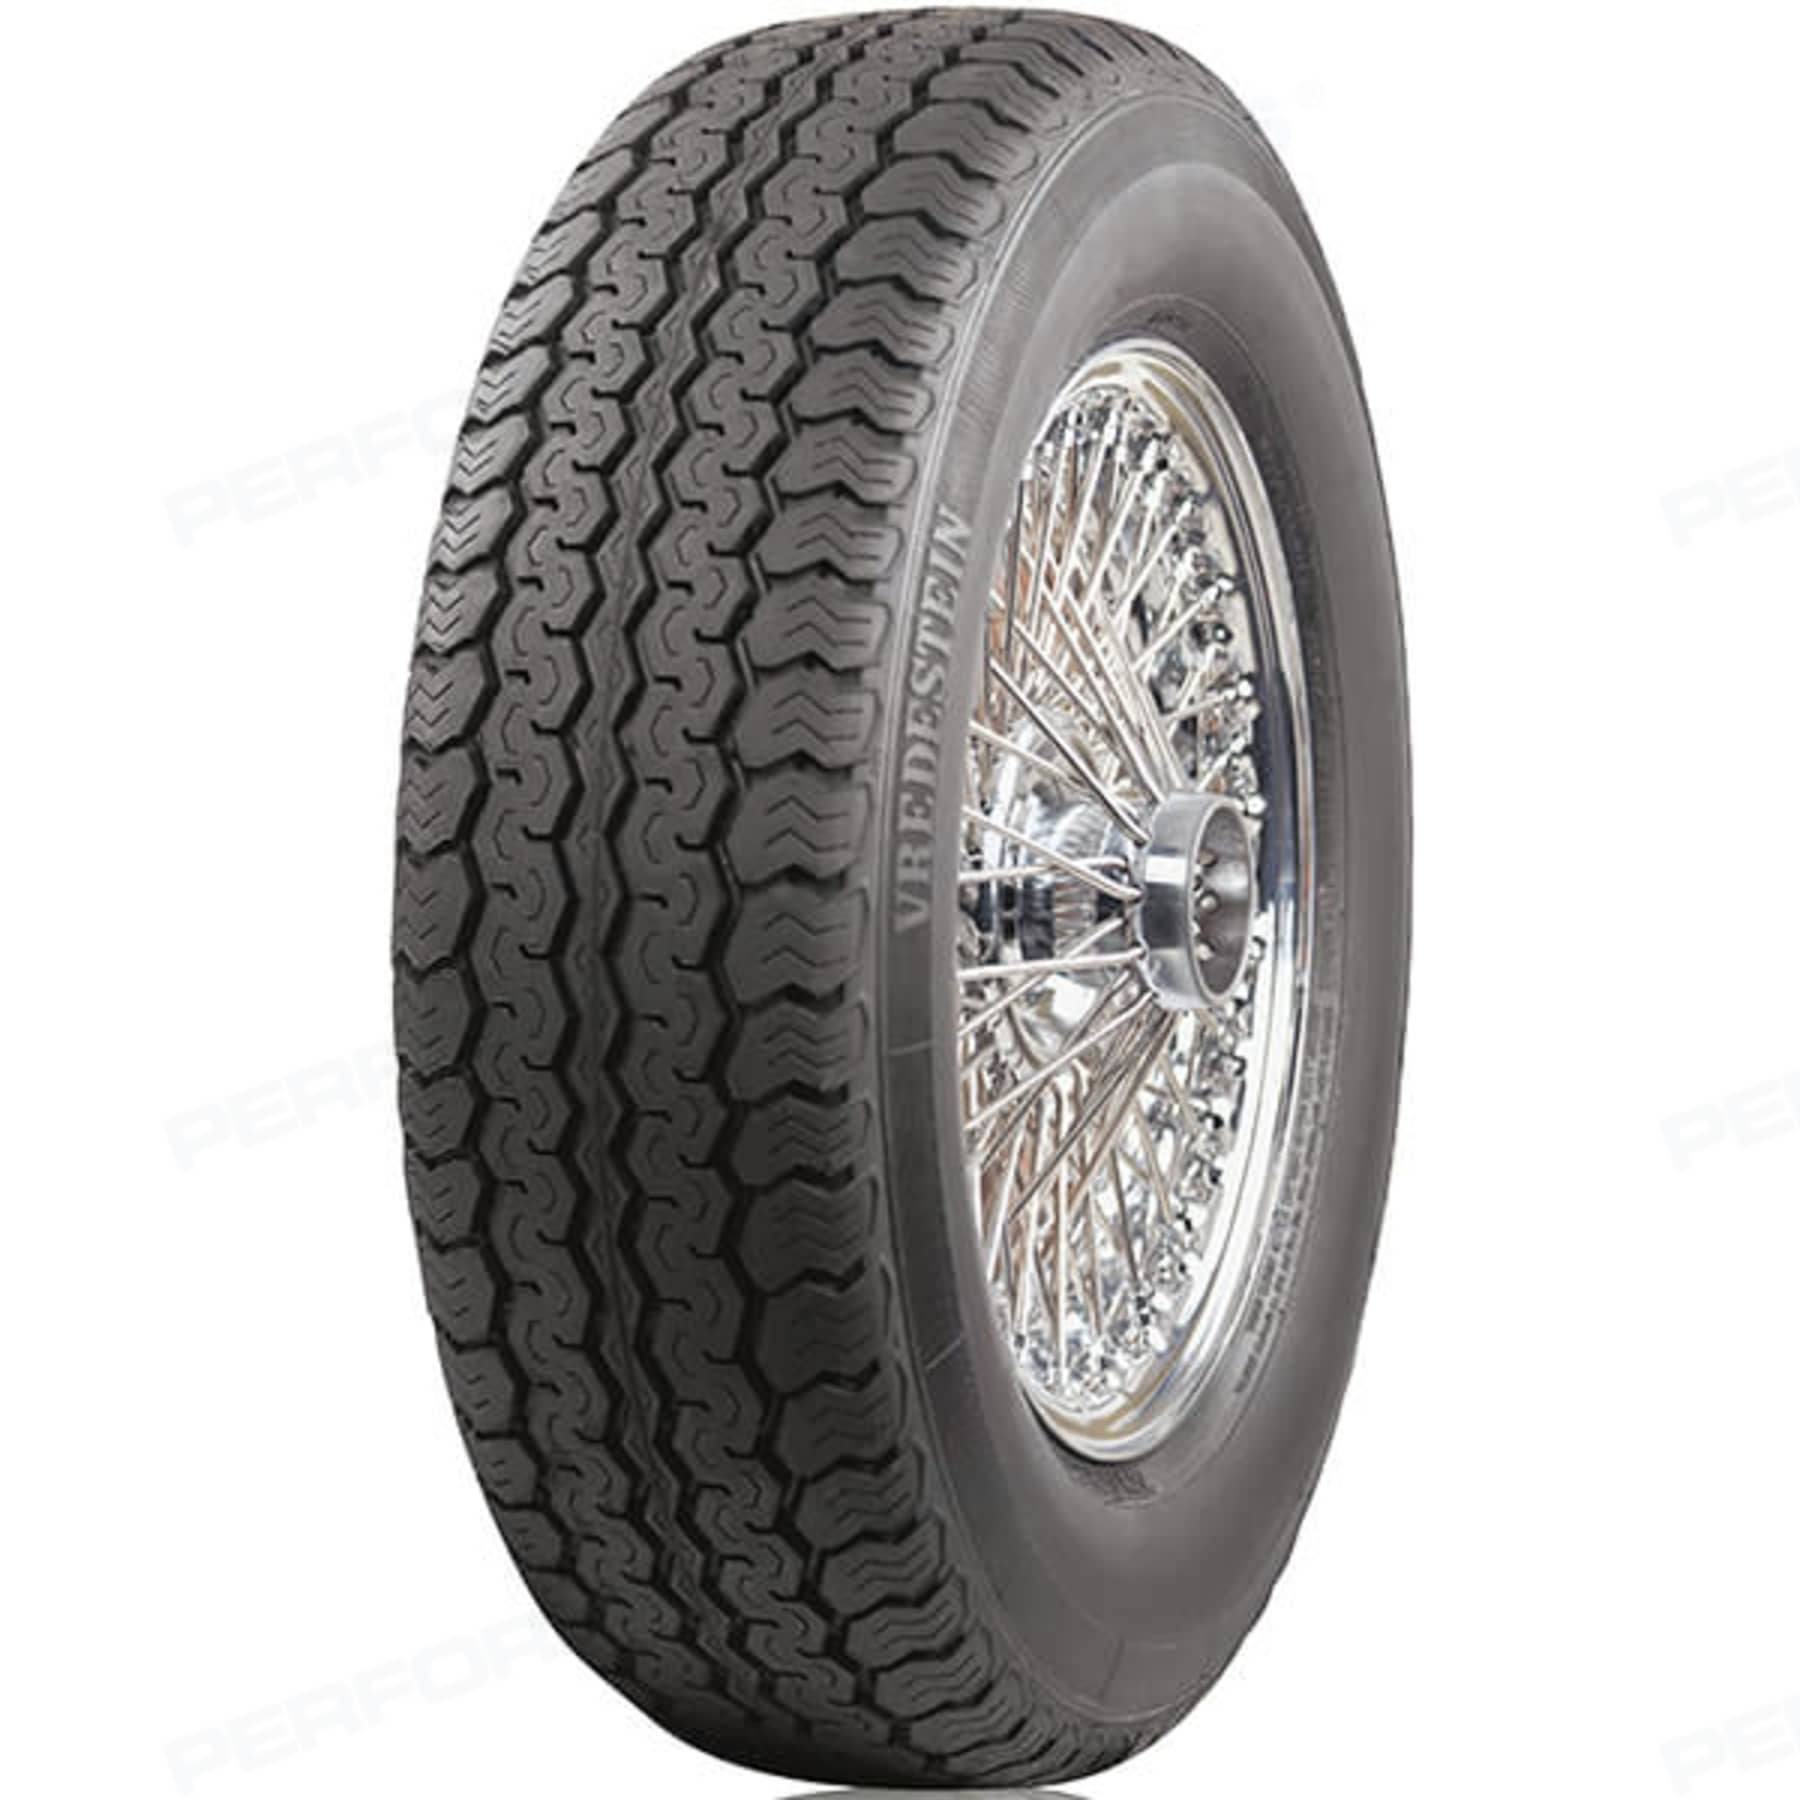 Vredestein Sprint Classic 185R14 Size:185/0 R14 Tyres